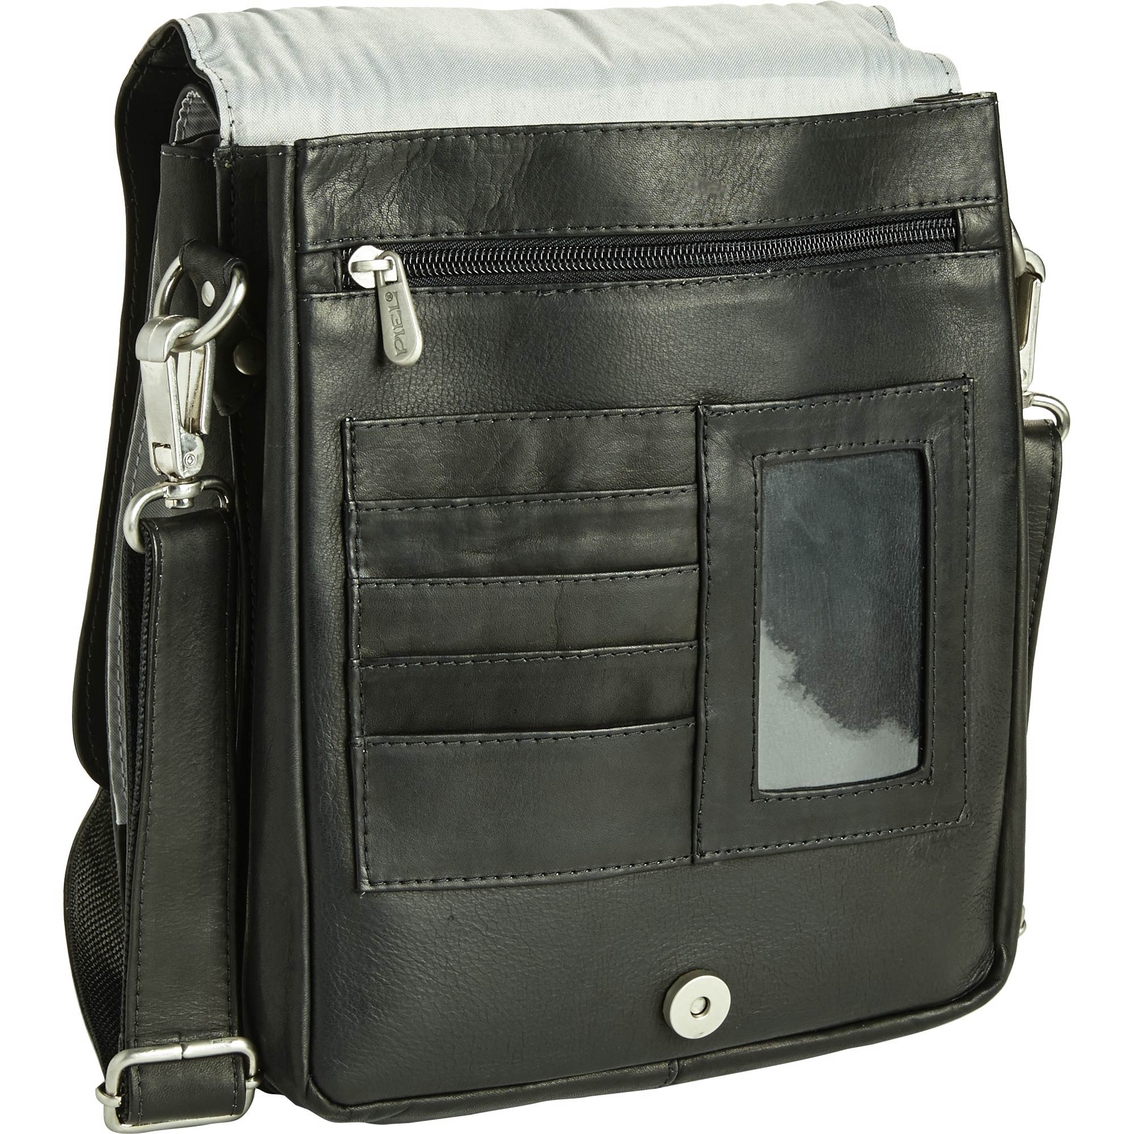 Piel Leather Double Flap-Over Shoulder Bag - Image 2 of 3